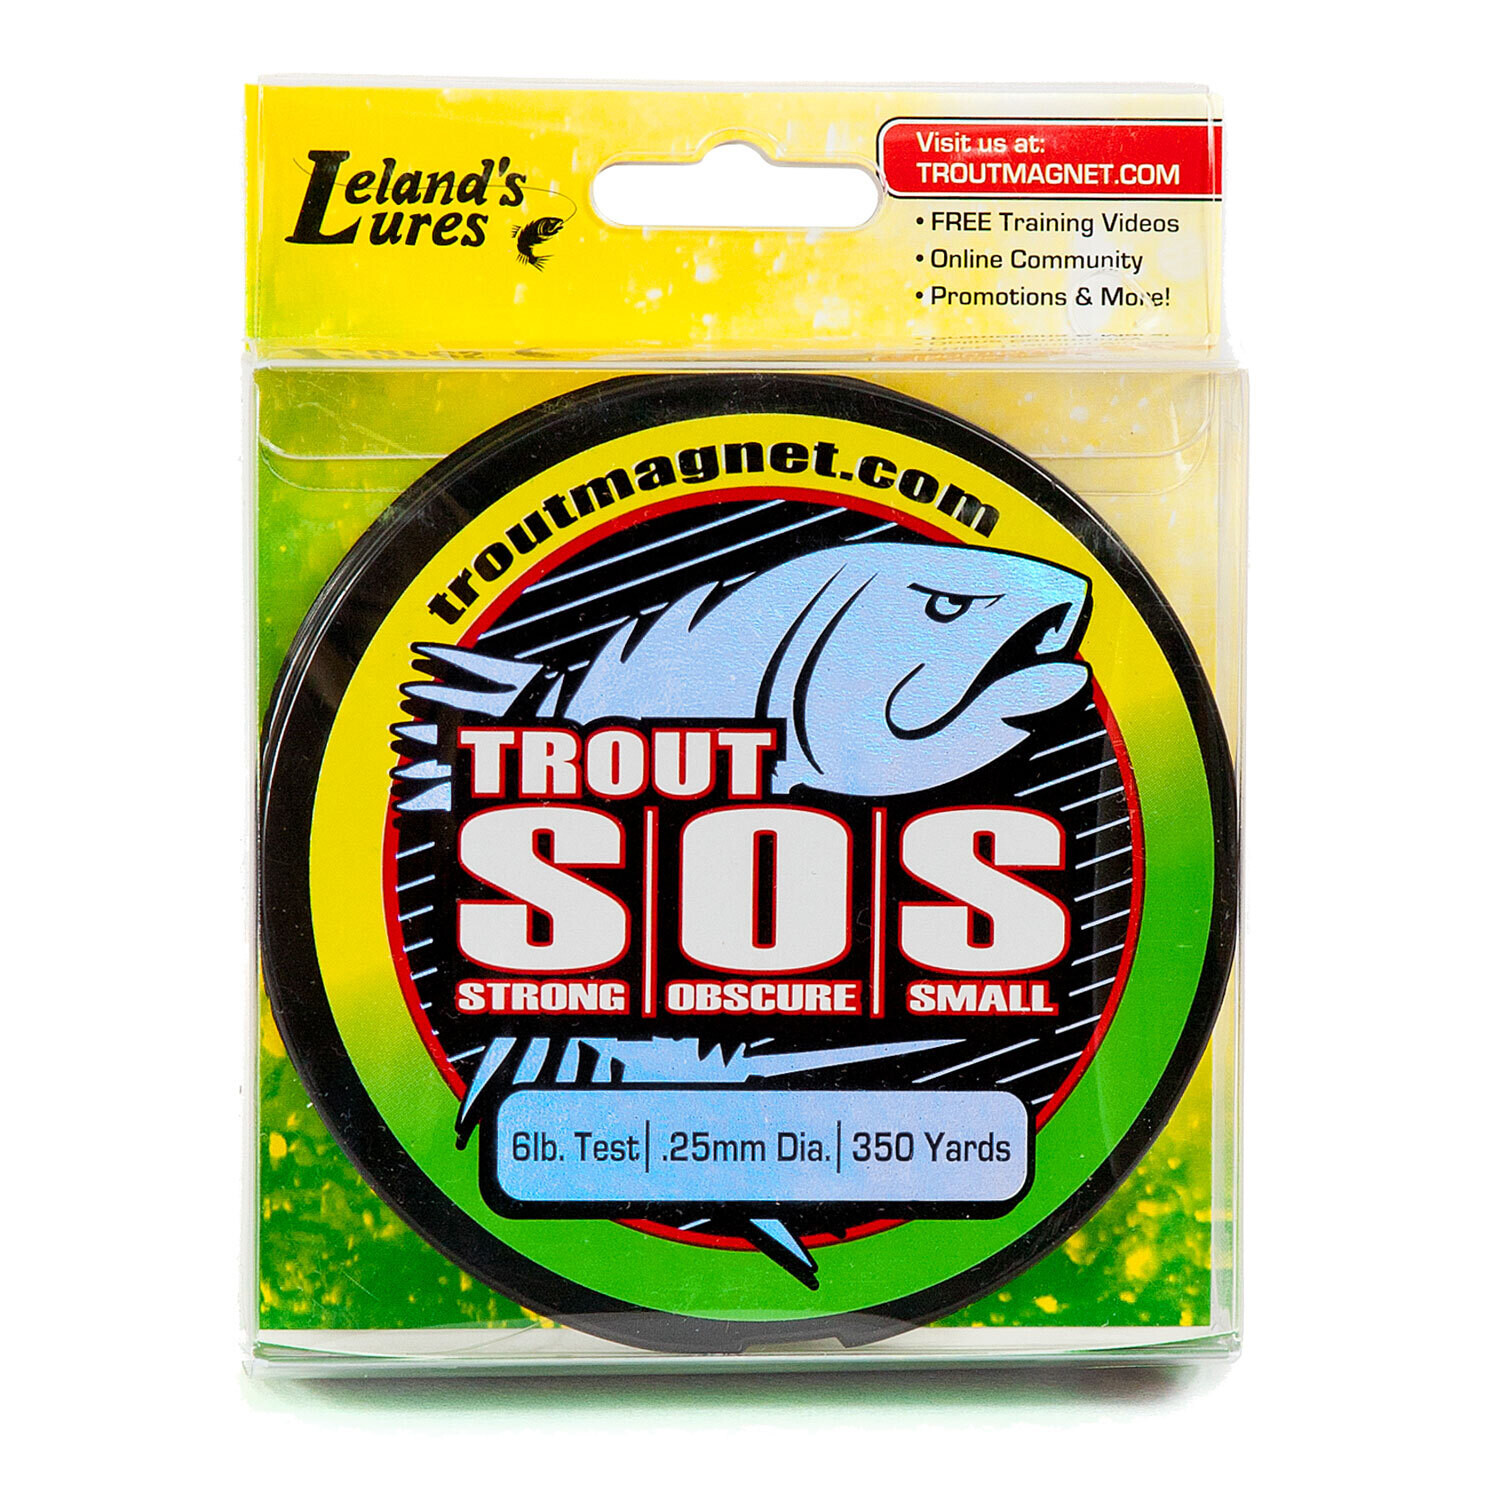 Leland Trout Magnet SOS Fishing Line